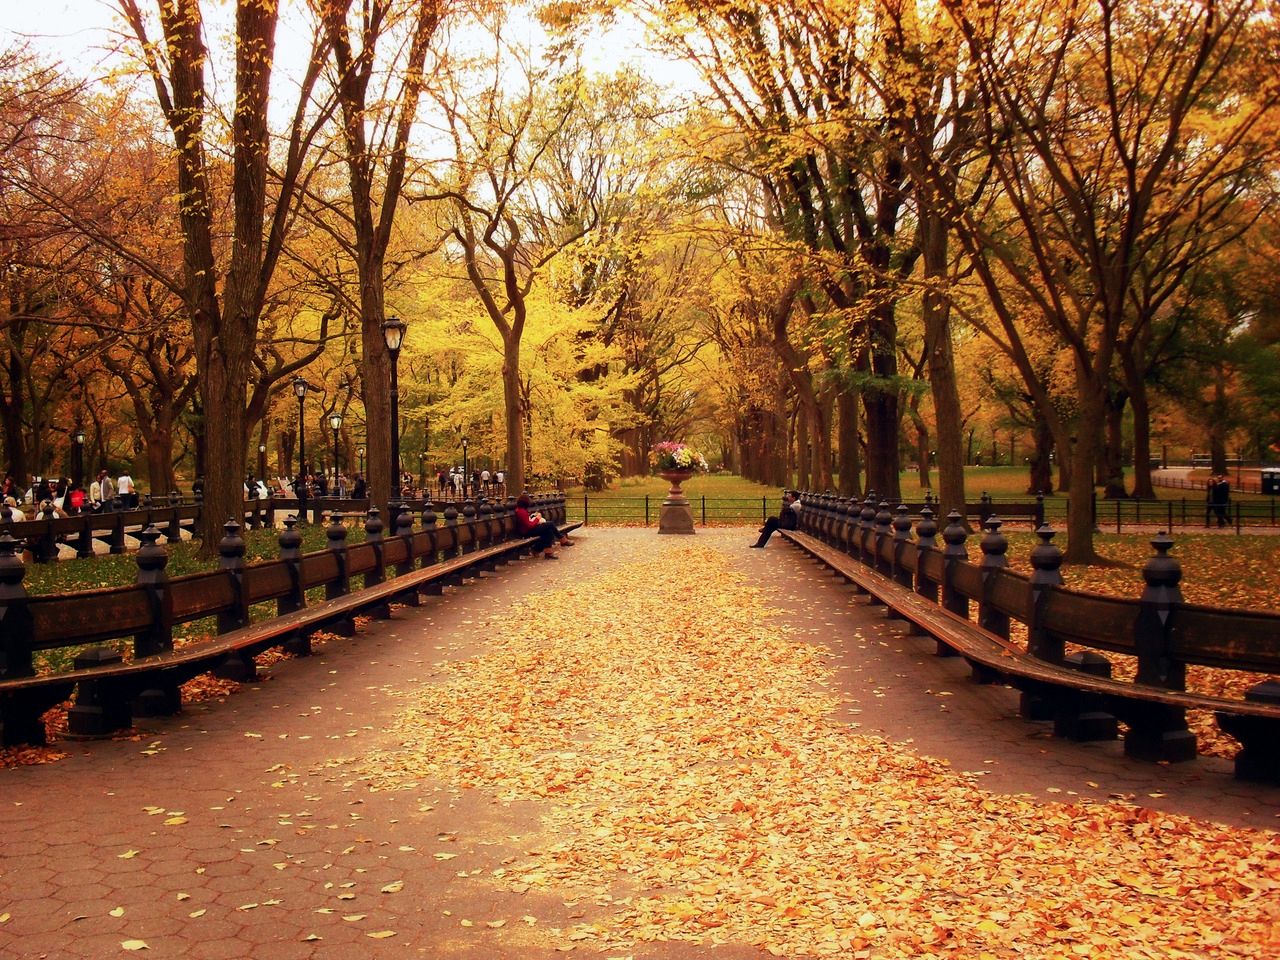 Romantic Autumn in New York Wallpaper. Autumn Wallpaper, Best Autumn Wallpaper and Lonely Autumn HD Wallpaper